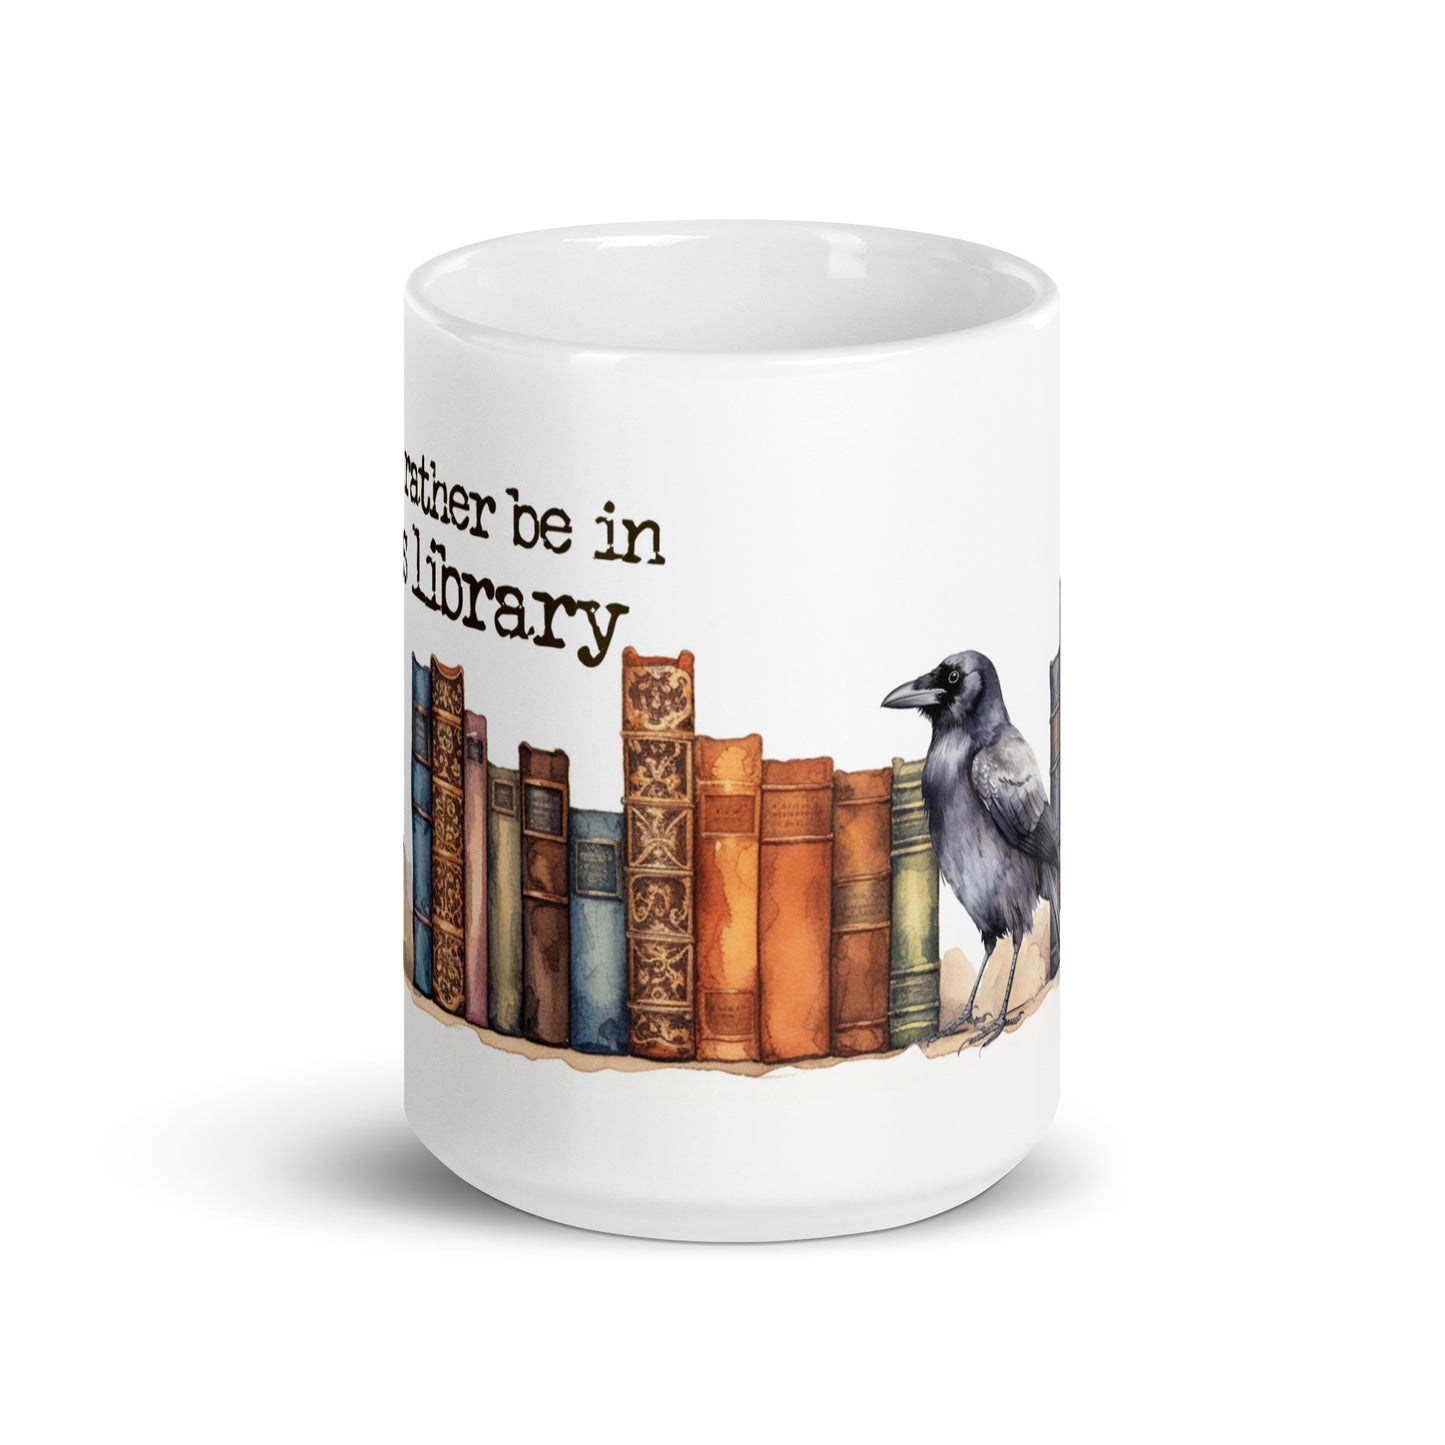 Gwen's Library Mug